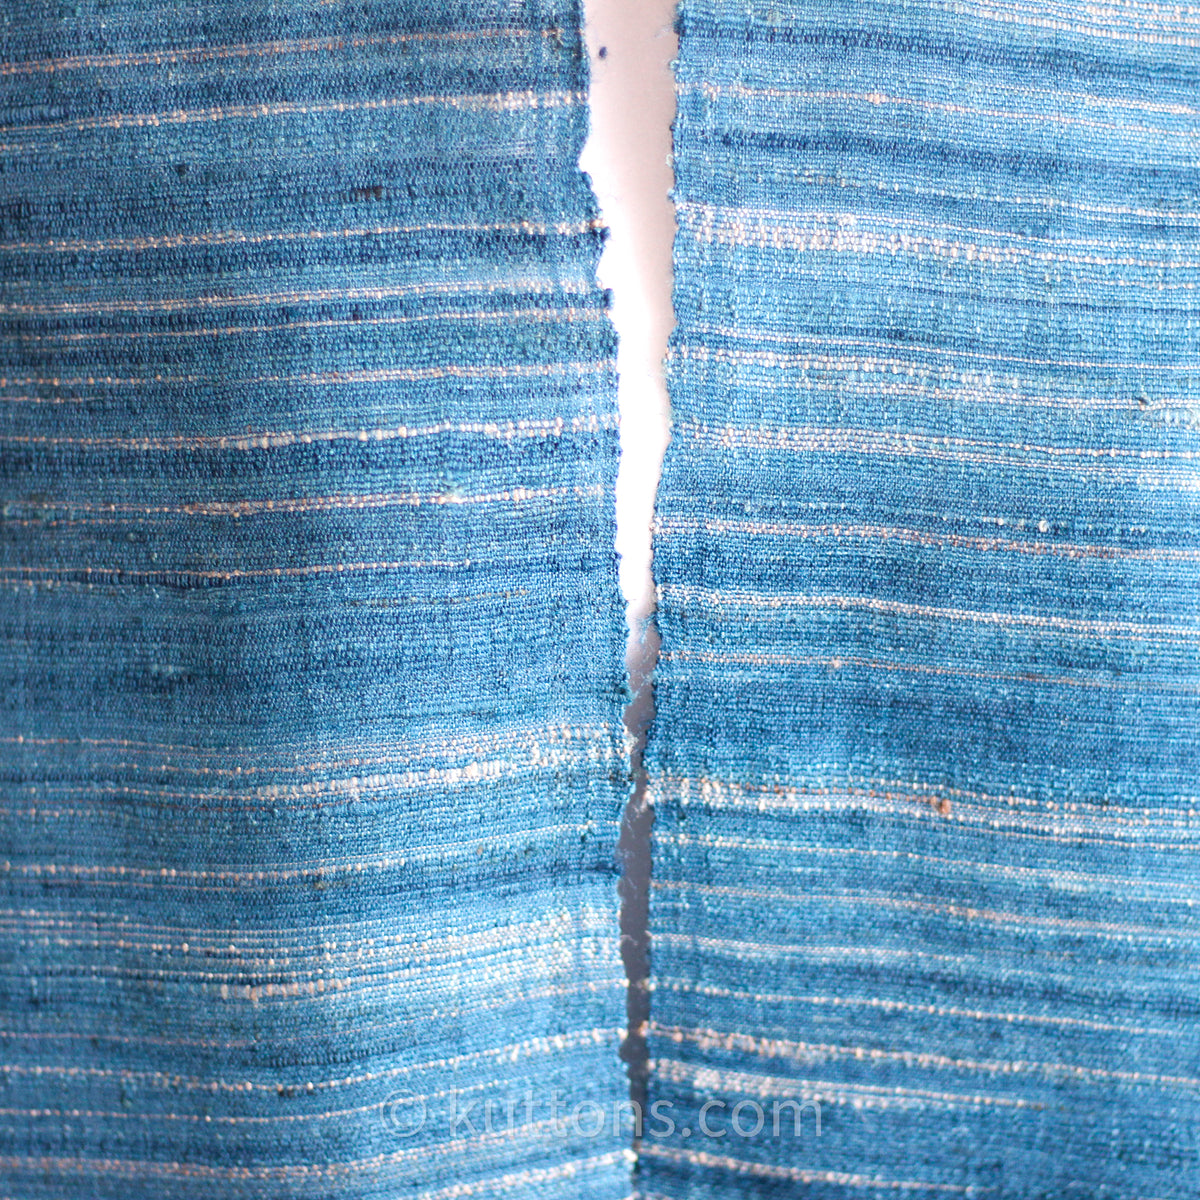 Handspun & Handwoven Tussar Silk, Merino Wool Shawl - With Mirror Embroidery | Blue, Golden Brown, 37x84"